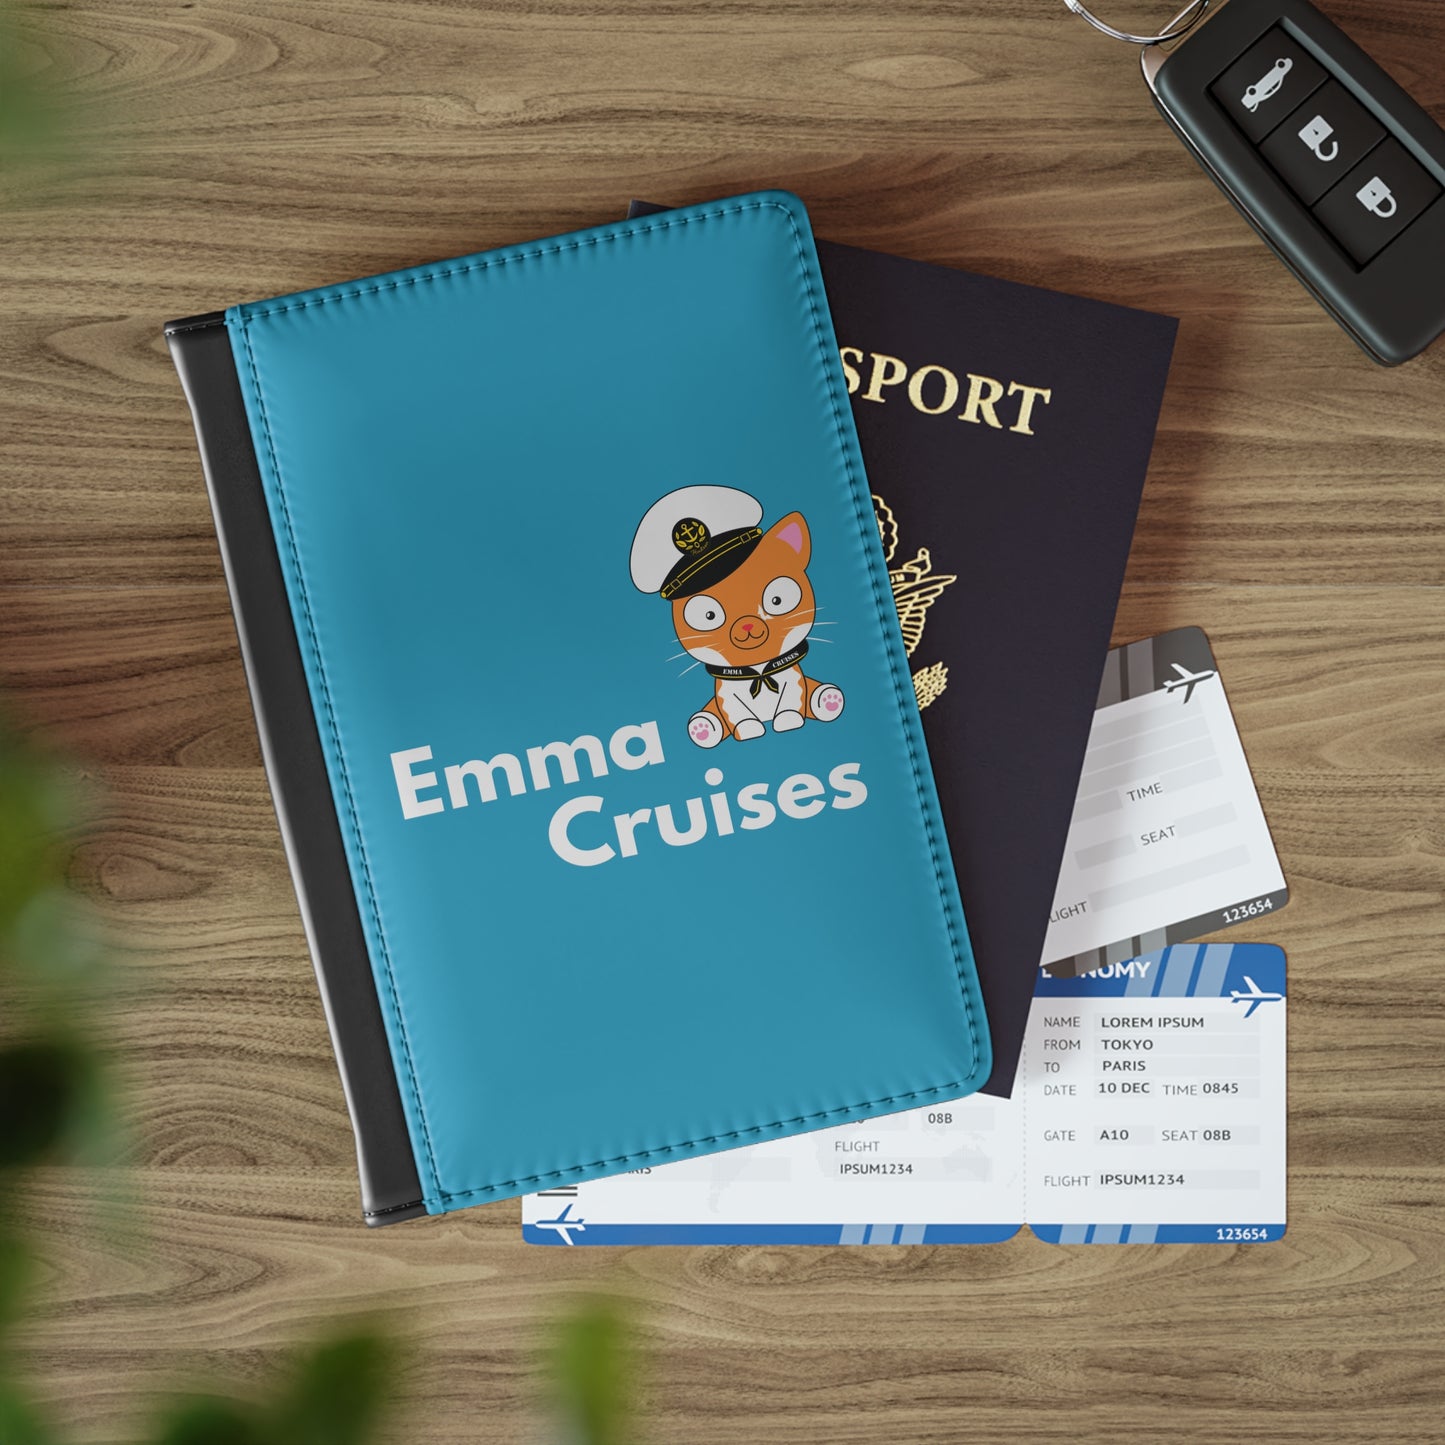 Emma Cruises - Funda para pasaporte